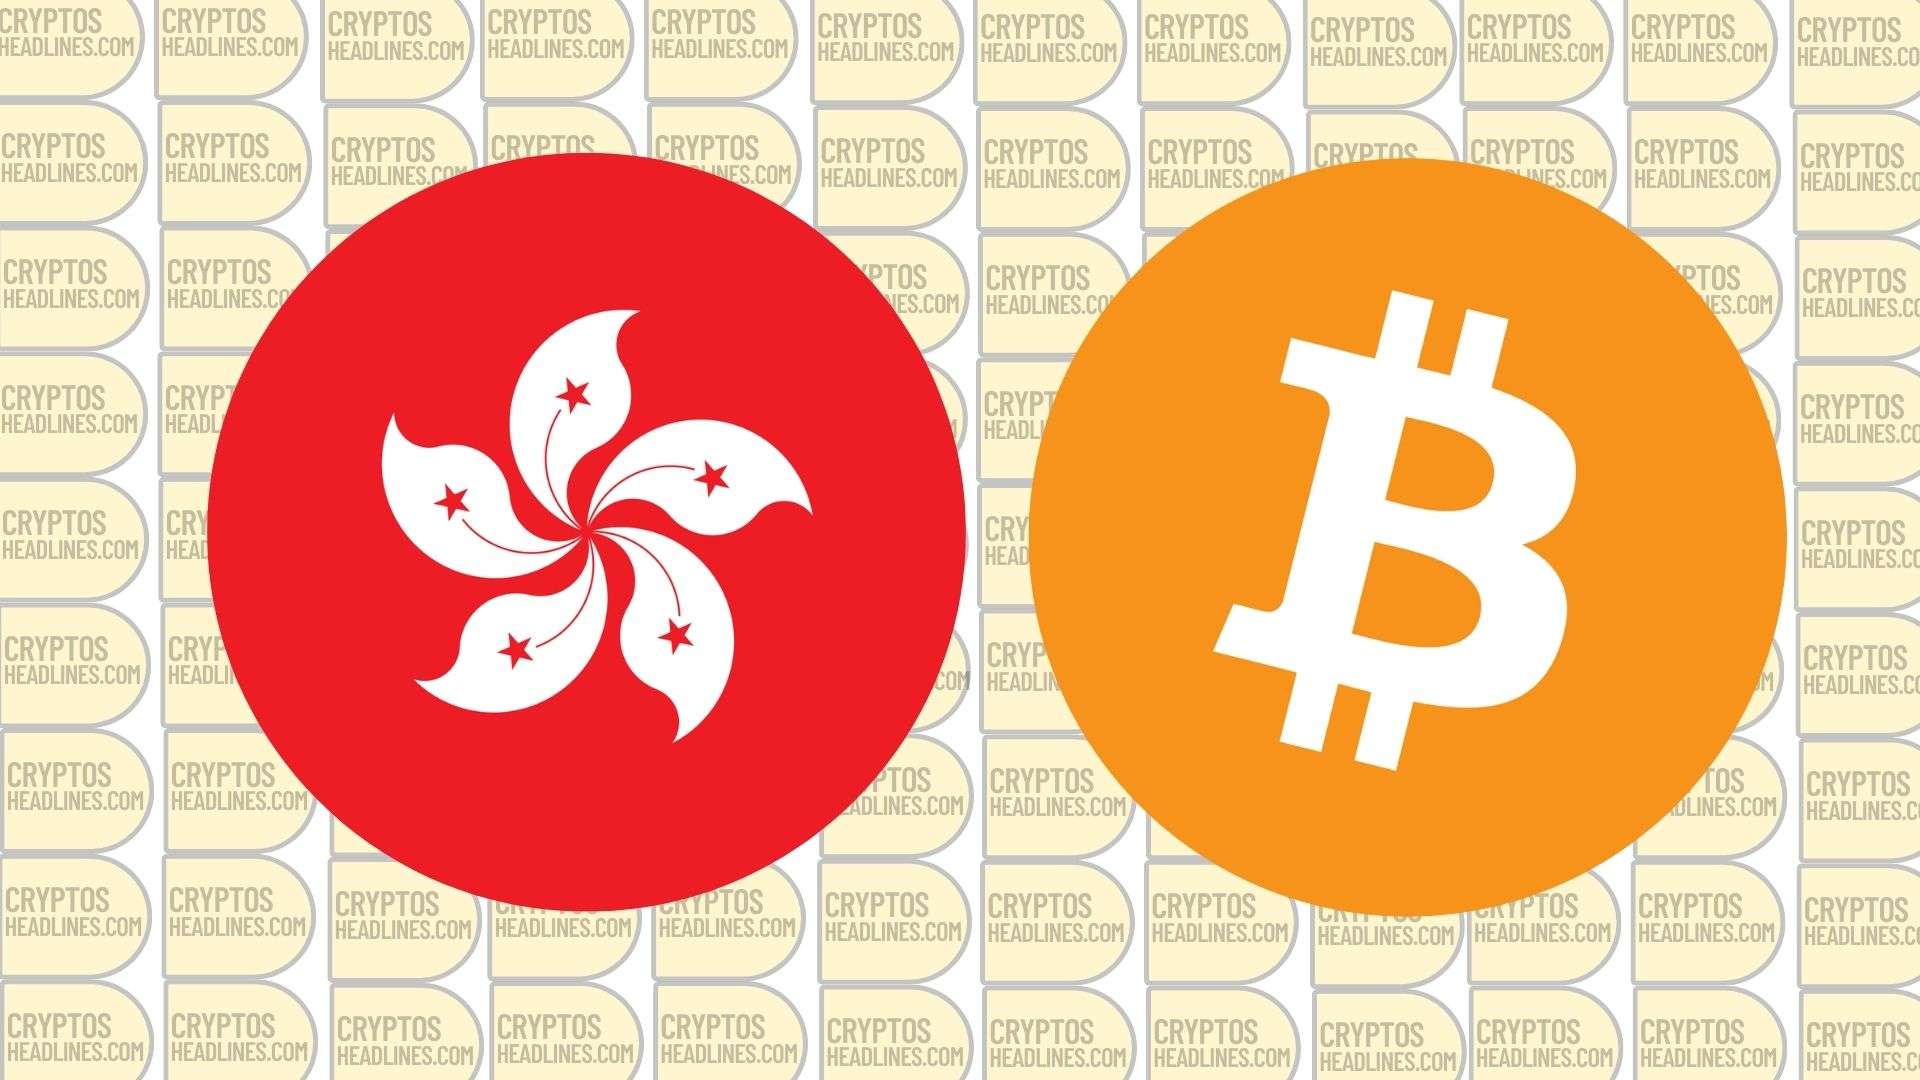 Hong Kong Cryptocurrency